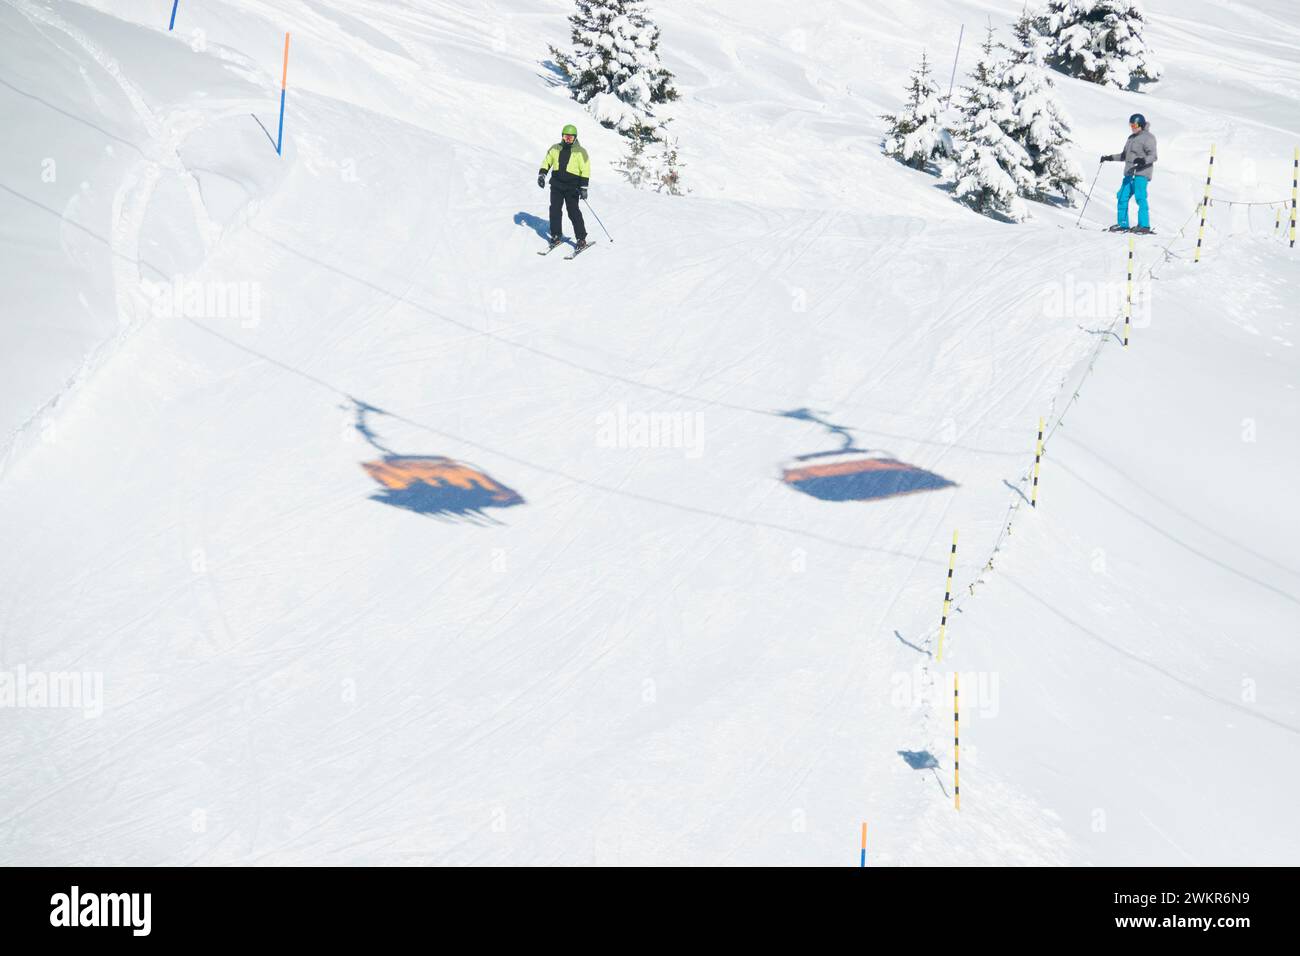 The skiers in action on a snowy hillside in Bettmeralp, Wallis, Switzerland. Stock Photo